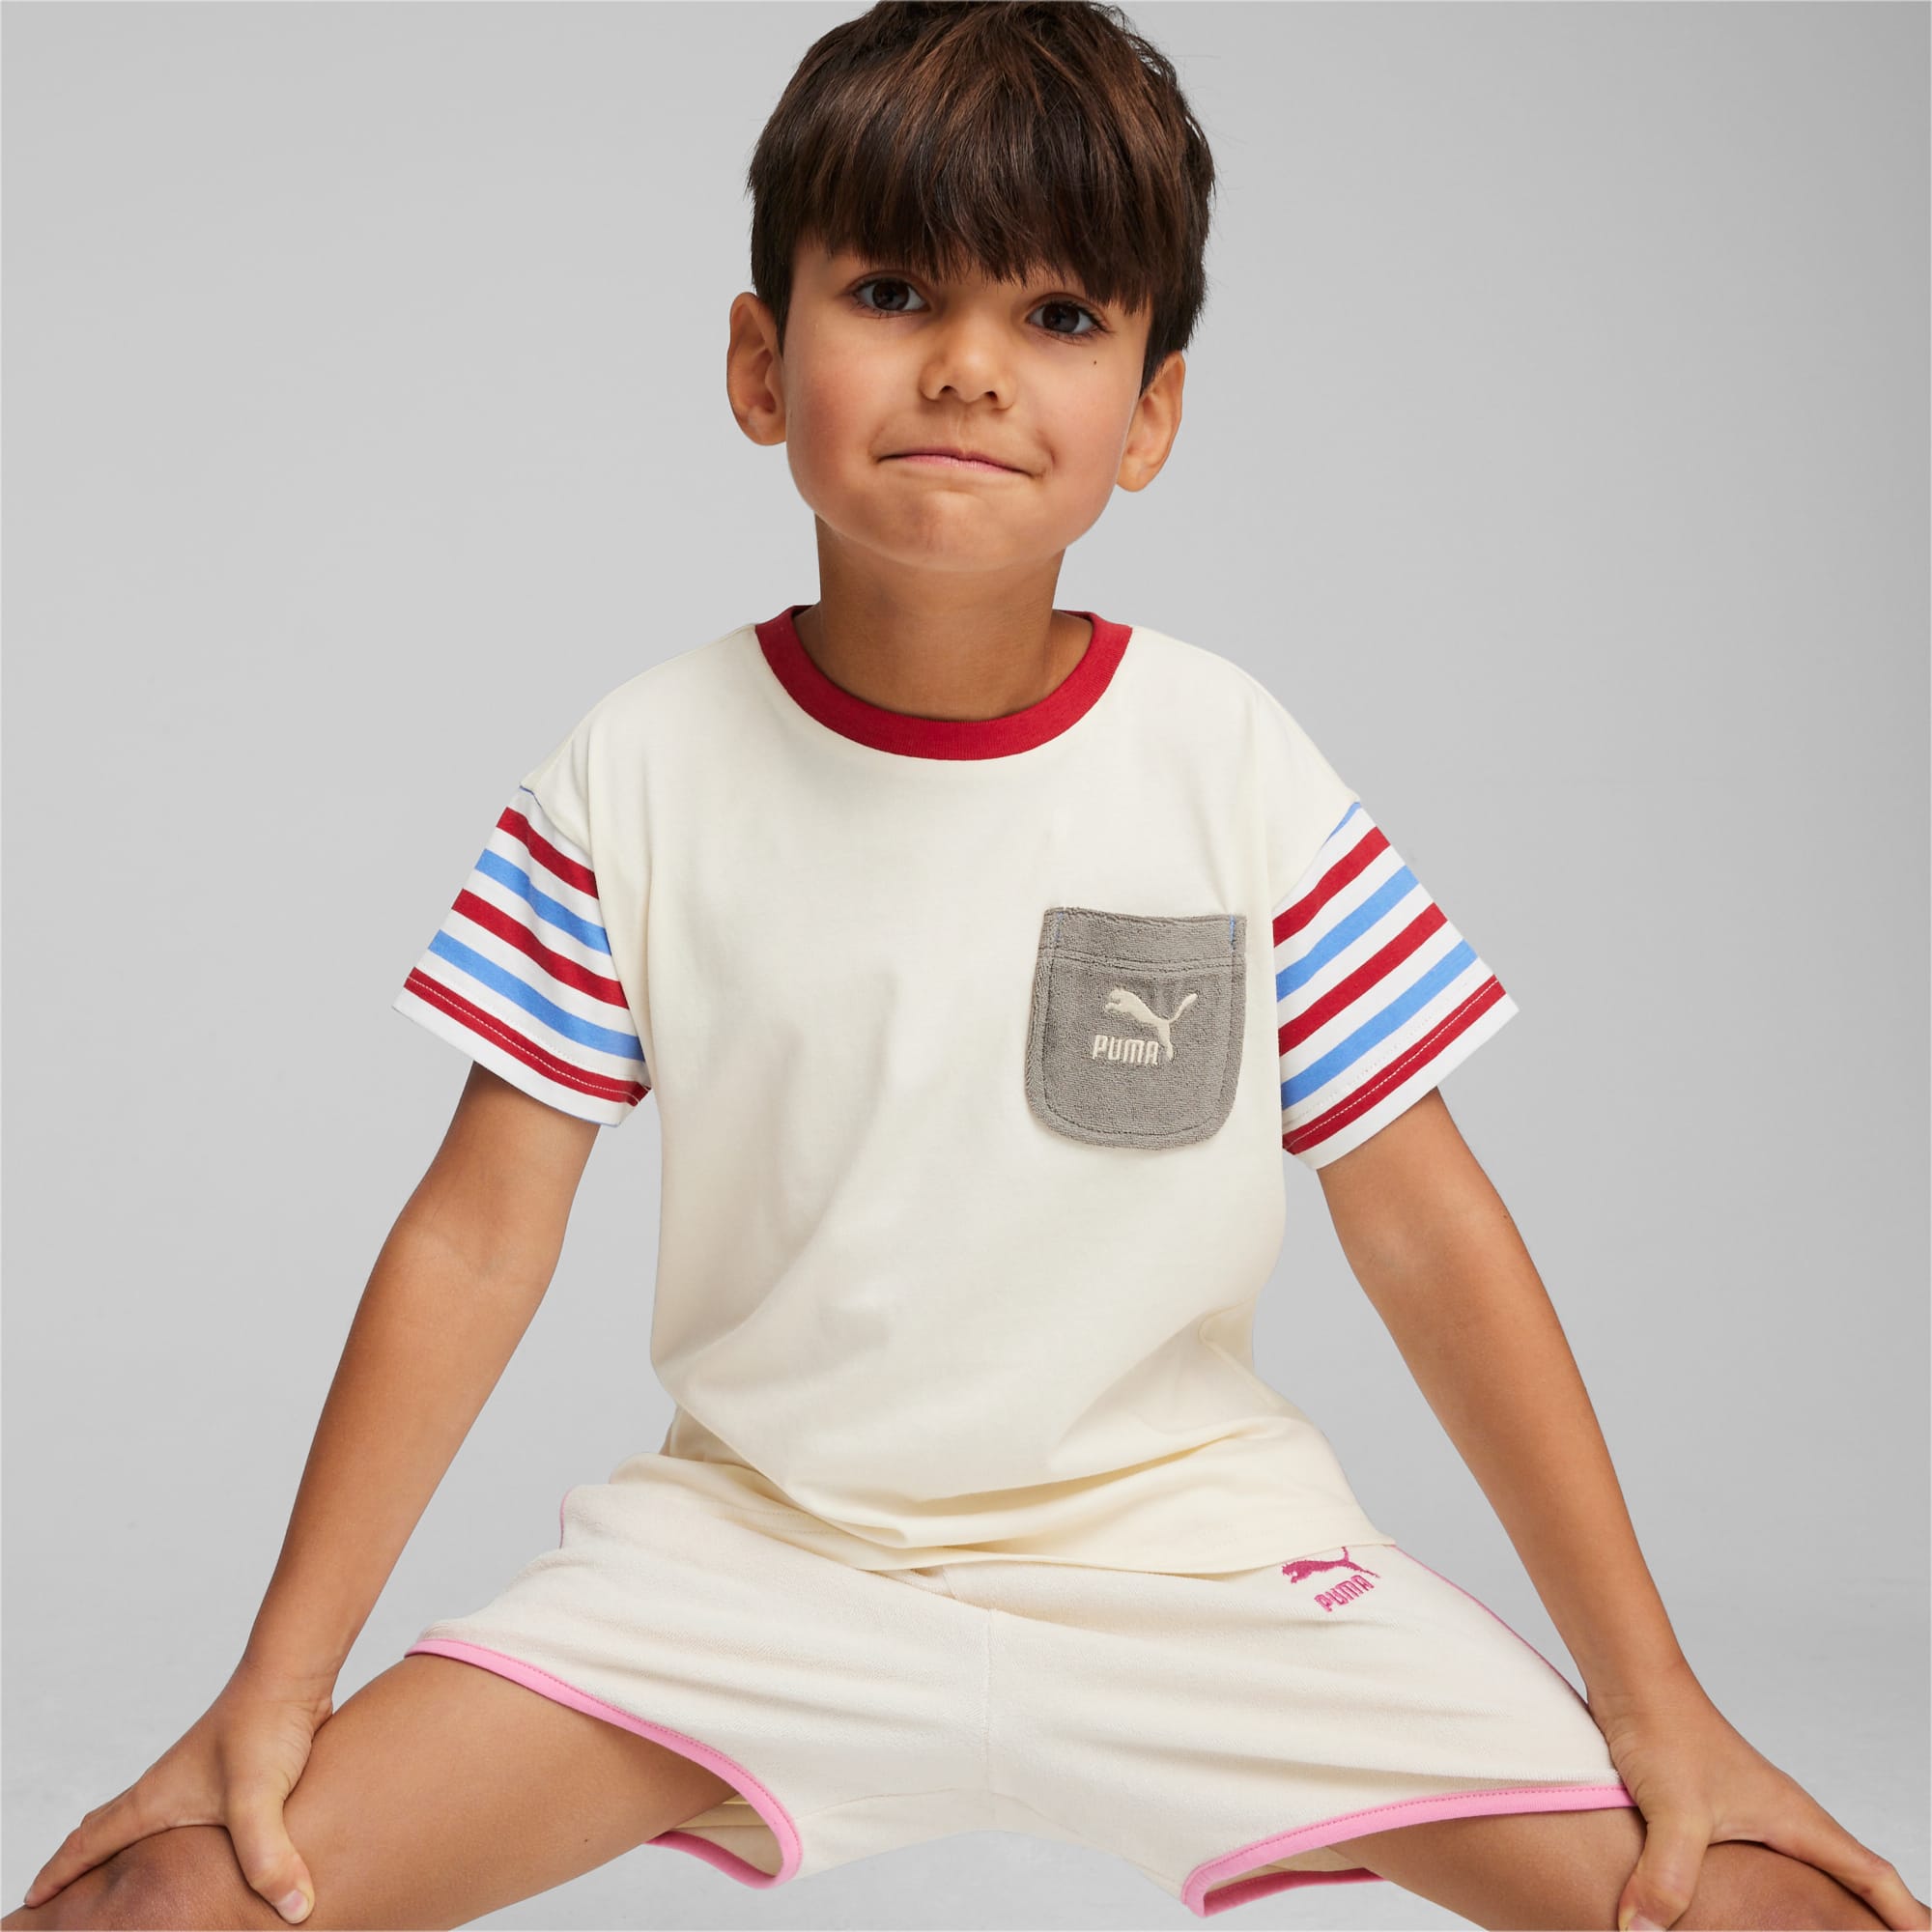 PUMA Summer Camp Classics Kids' T-Shirt, Sugared Almond, Size 92, Clothing